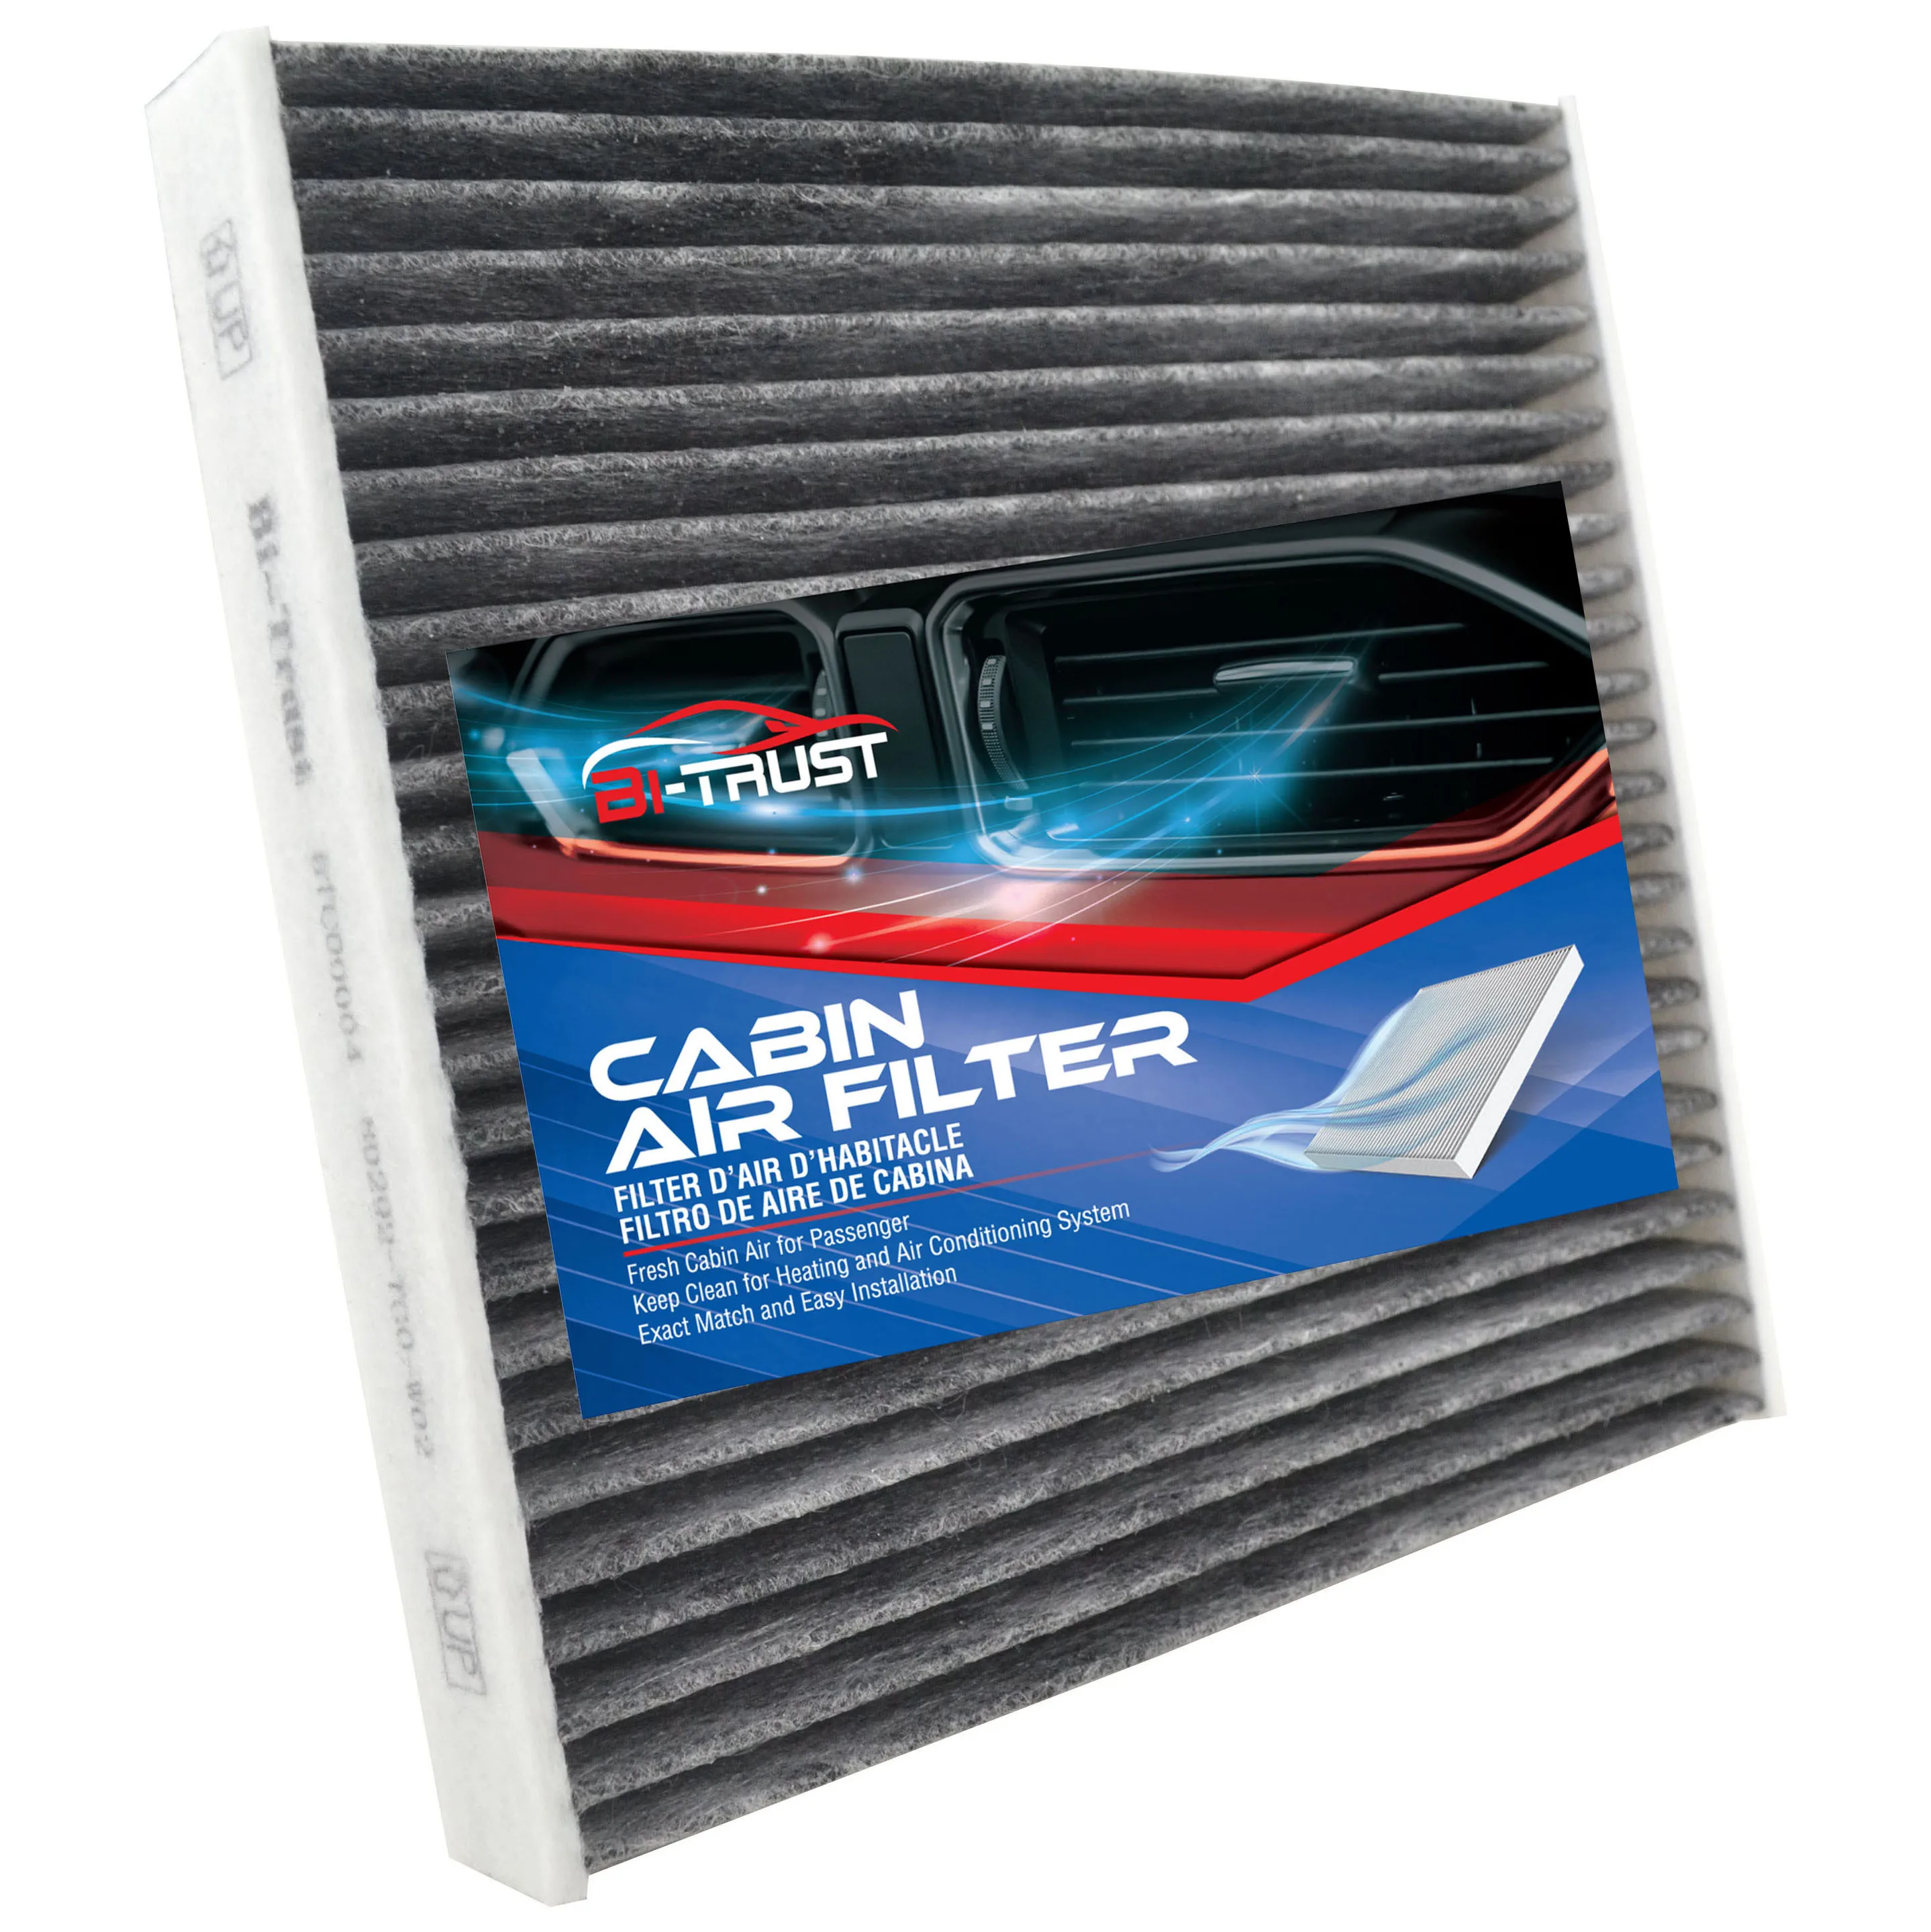 Bi-Trust Cabin Air Filter for Acura RDX Honda Civic/Clarity/CR-V/CR-Z/Fit/HR-V/Insight/Odyssey 80291-T5R-A01 CF11182